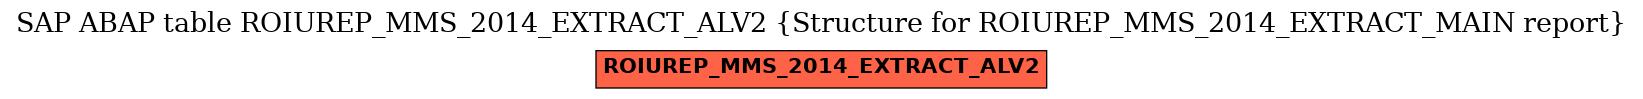 E-R Diagram for table ROIUREP_MMS_2014_EXTRACT_ALV2 (Structure for ROIUREP_MMS_2014_EXTRACT_MAIN report)